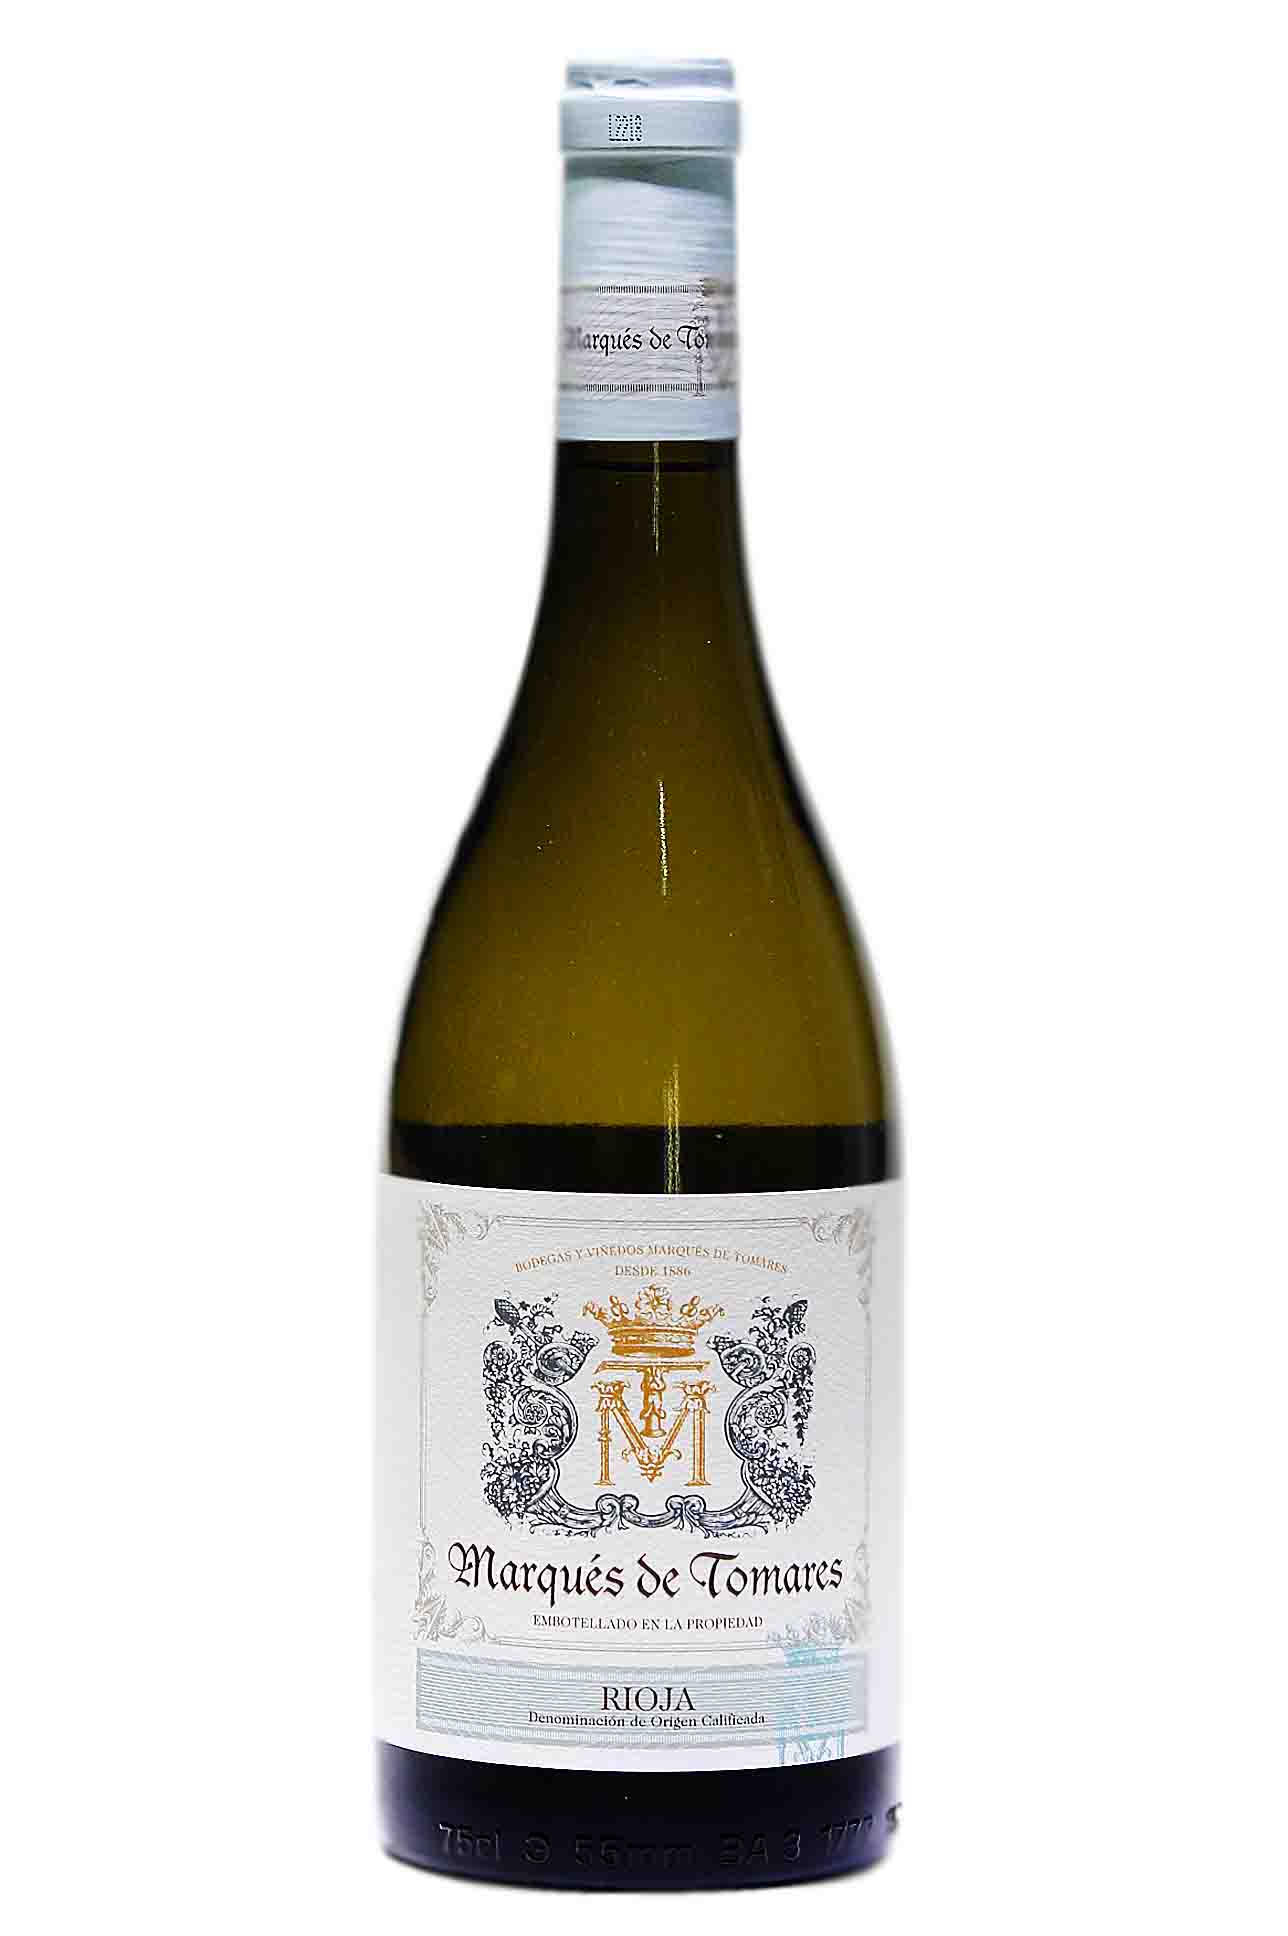 Marques de Tomares white wine